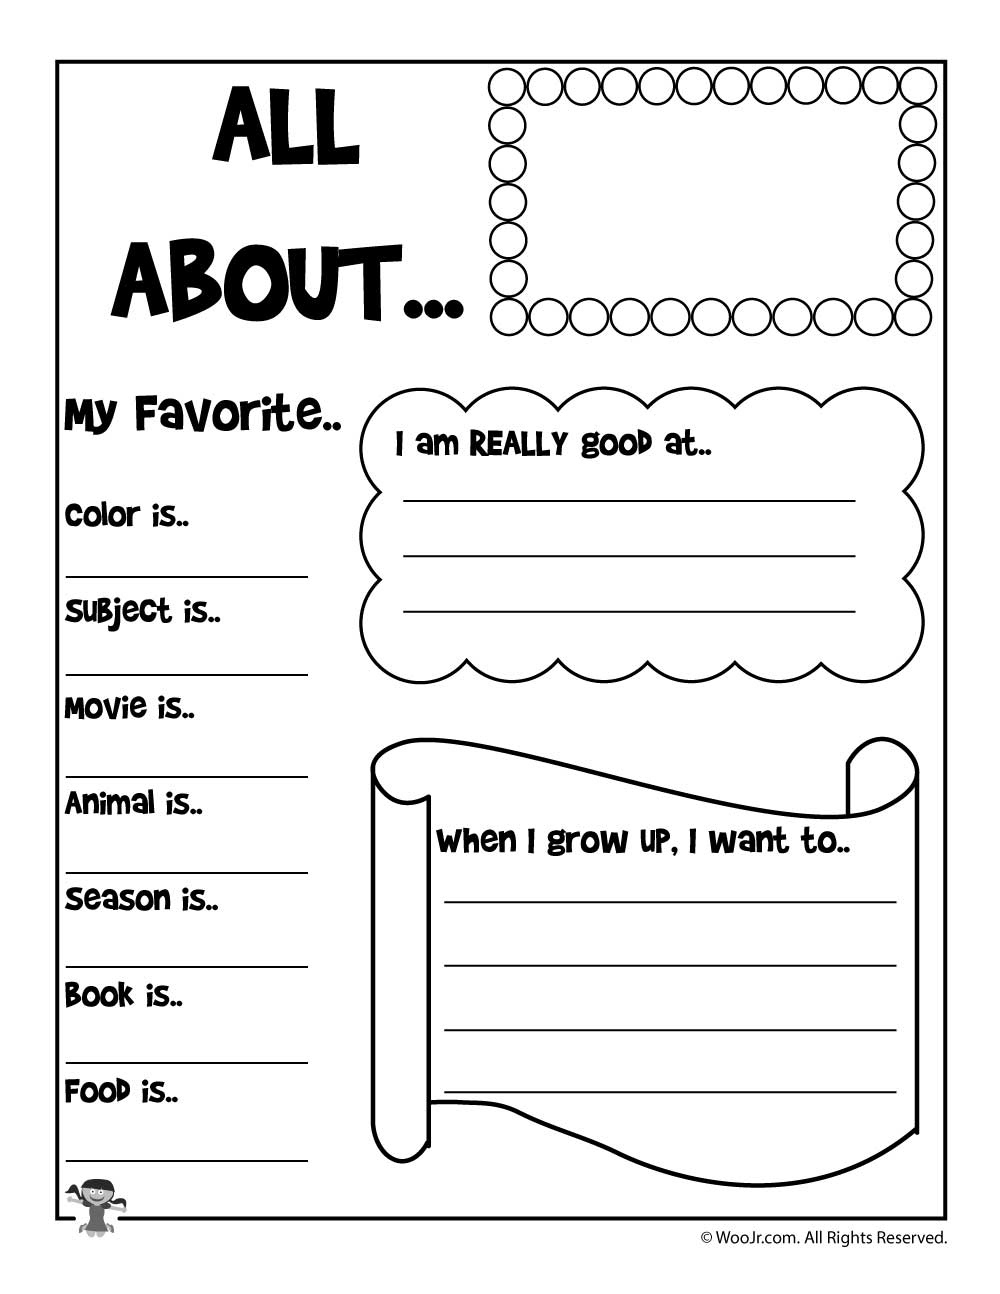 All About Me Worksheet Preschool Printable Forms Worksheets Diagrams